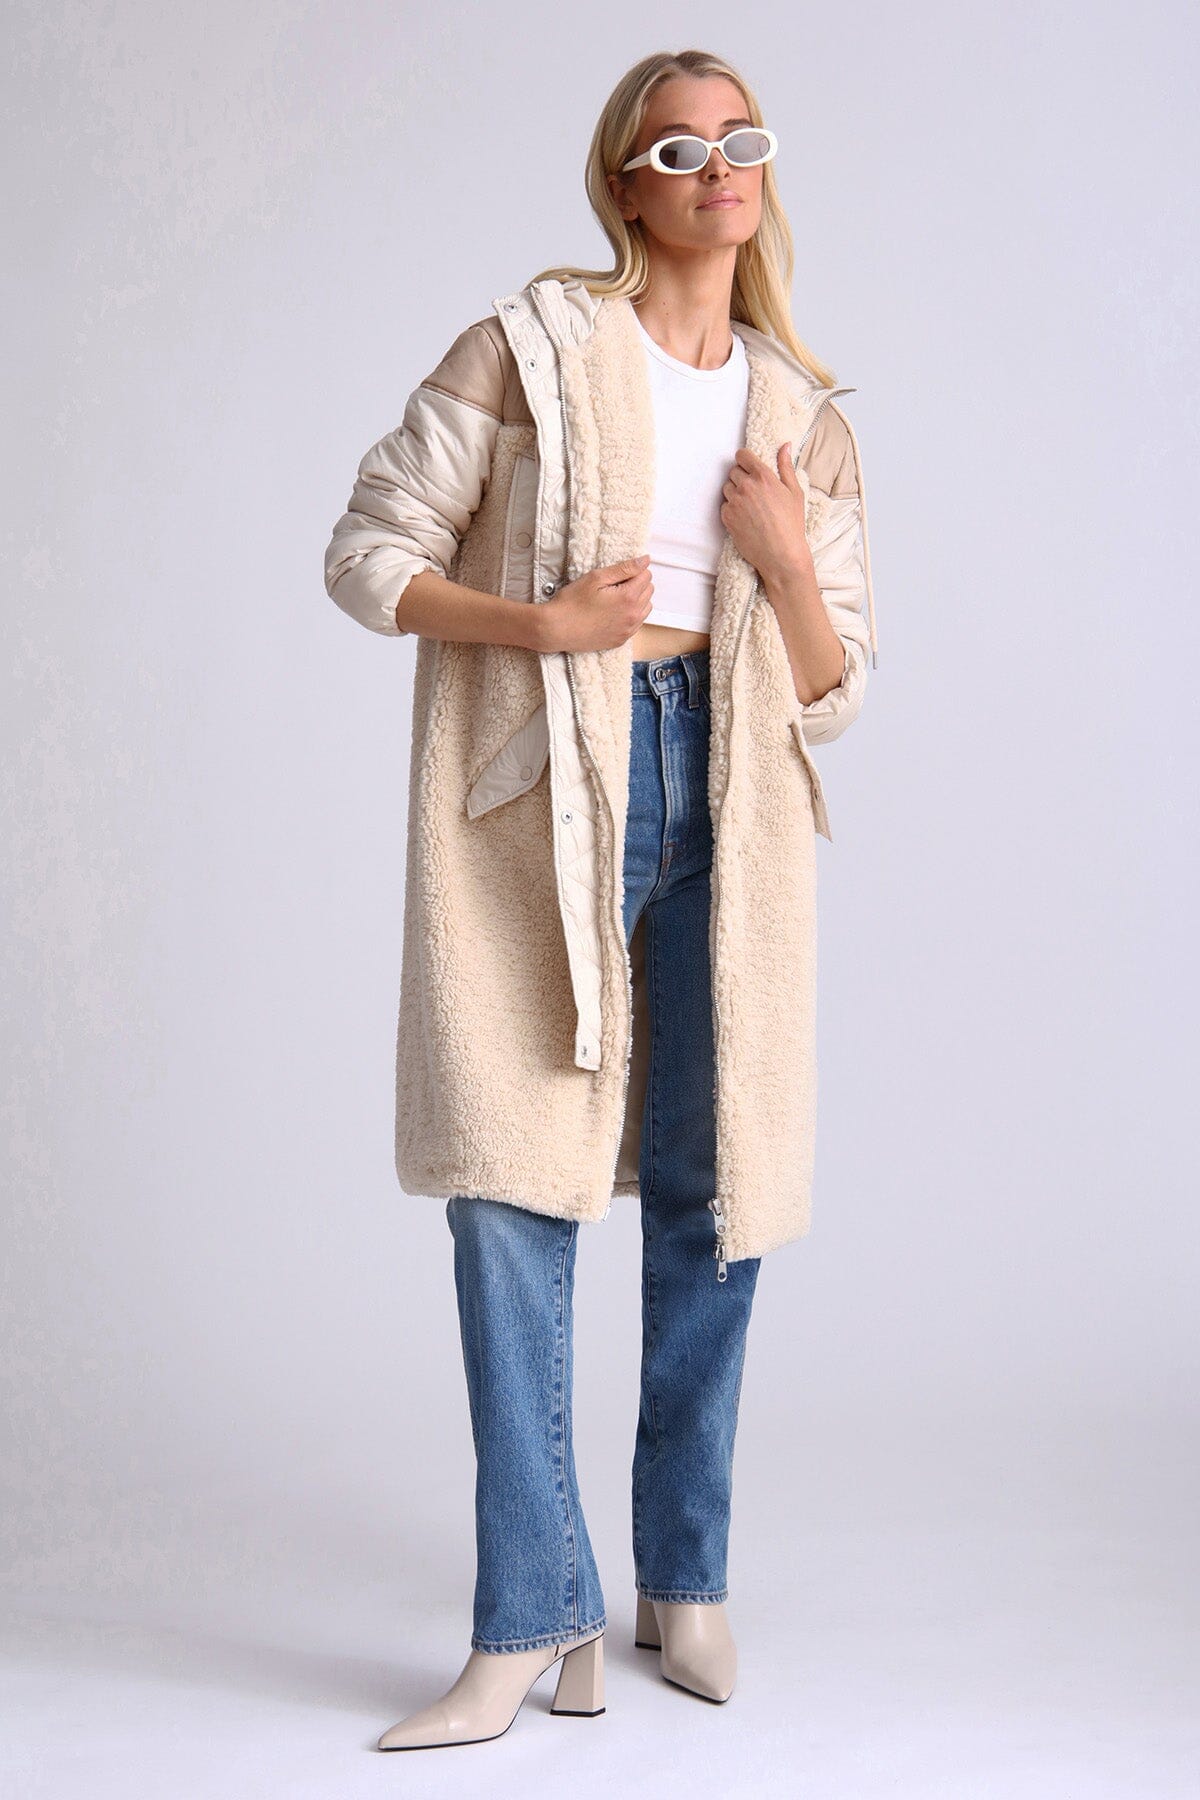 Oat beige faux fur quilted anorak long coat jacket - women's figure flattering casual outerwear for Fall 2023 trends